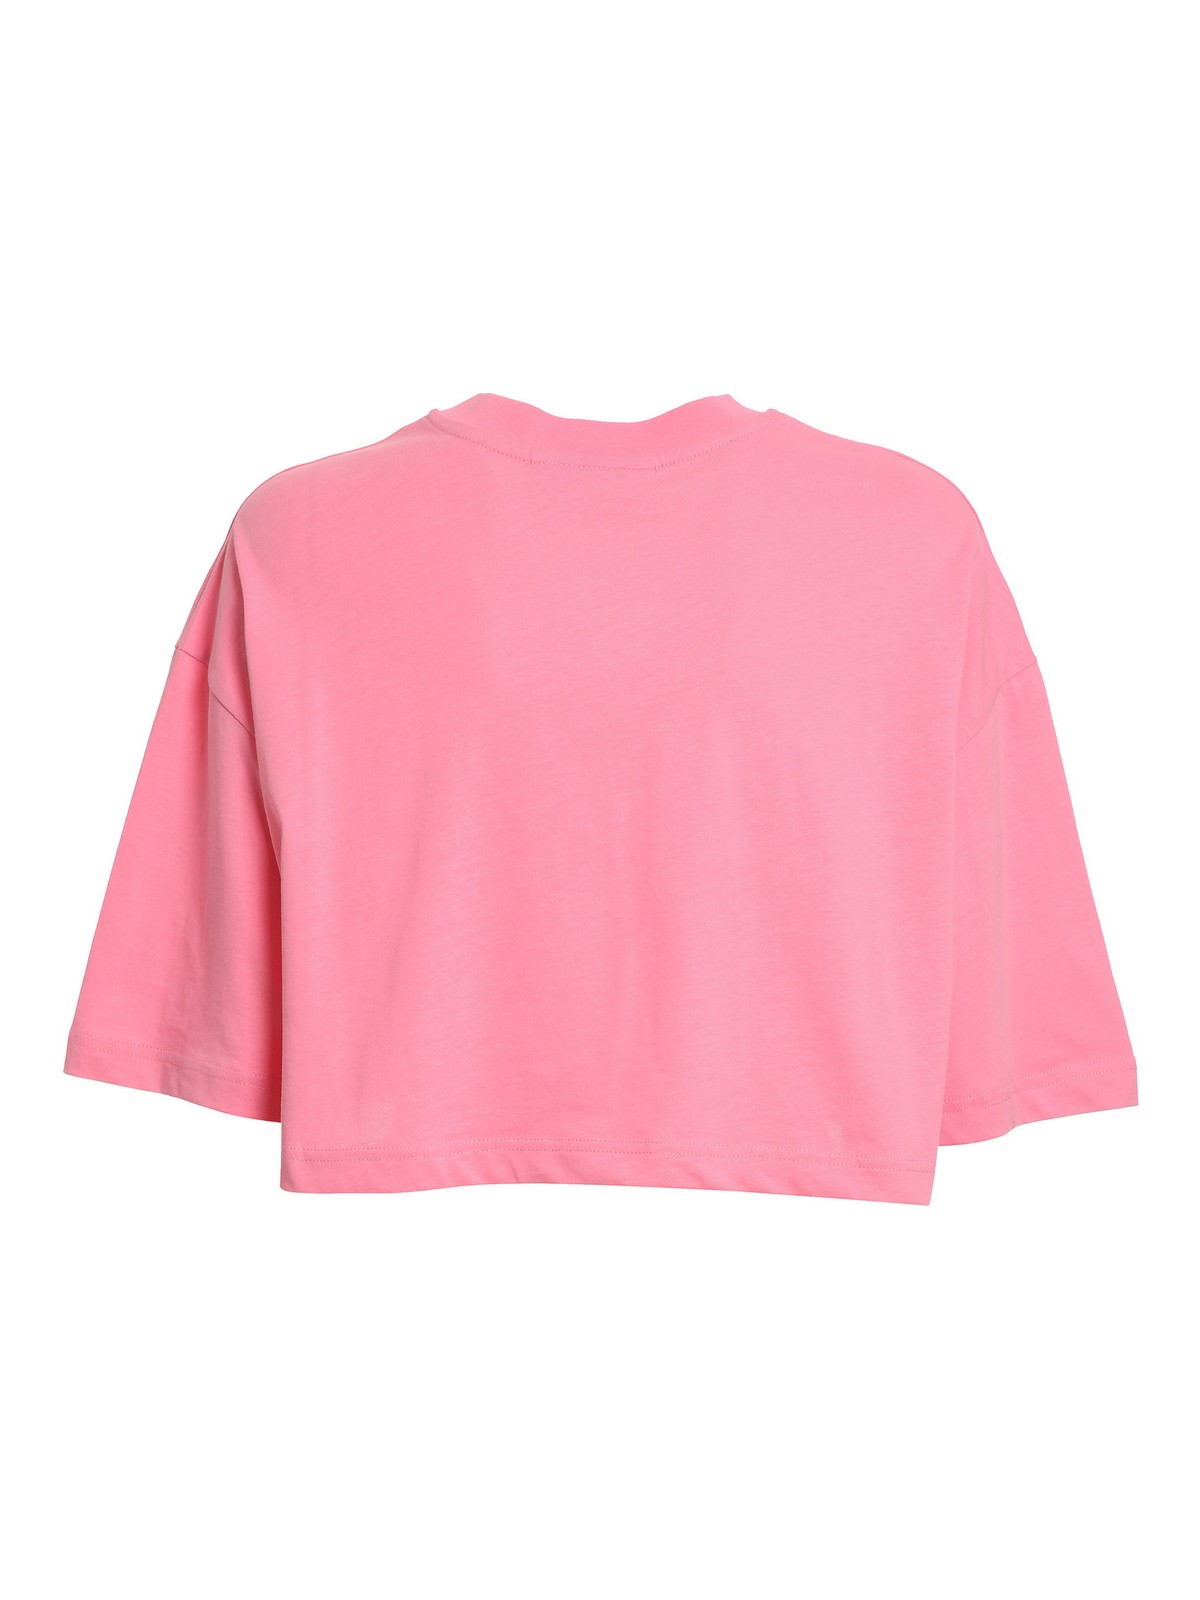 Shop Chiara Ferragni Camiseta - Rosado In Pink